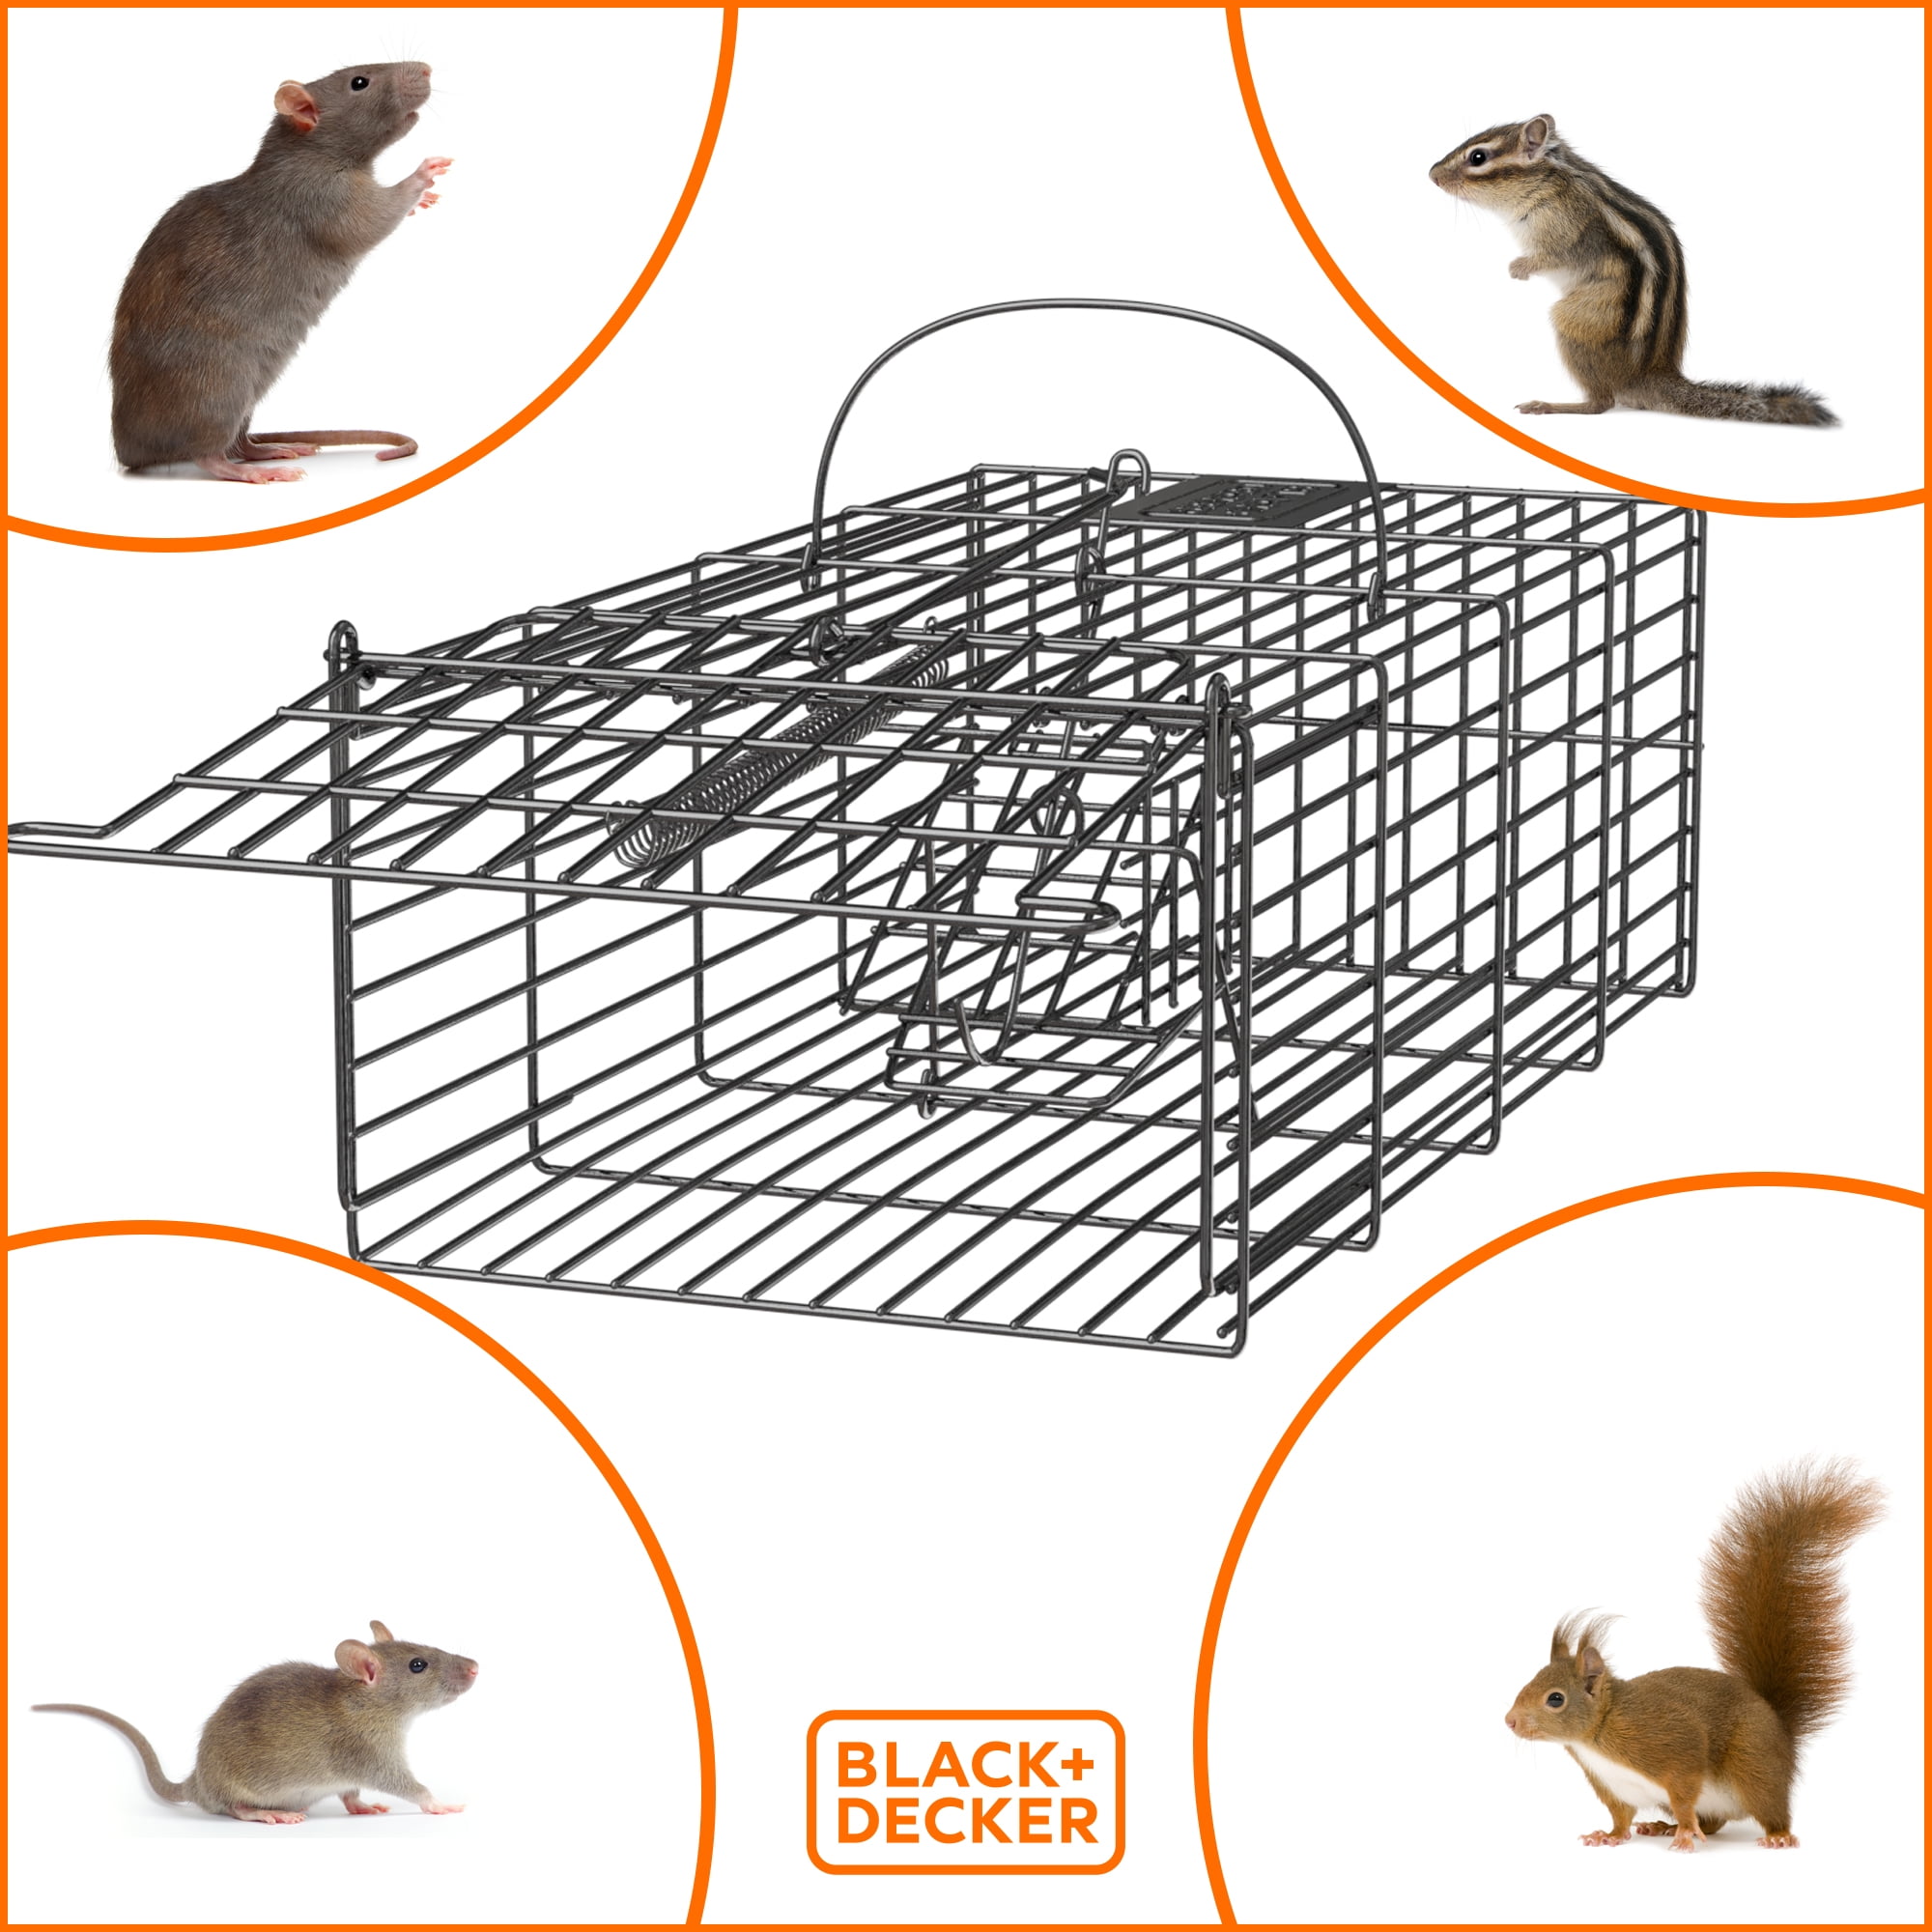 BLACK+DECKER Rat Trap Outdoor & Rat Traps Indoor (4 Pack - LARGE Size)  $7.98 w/ Free Prime Ship after 50% Clip Save Coupon